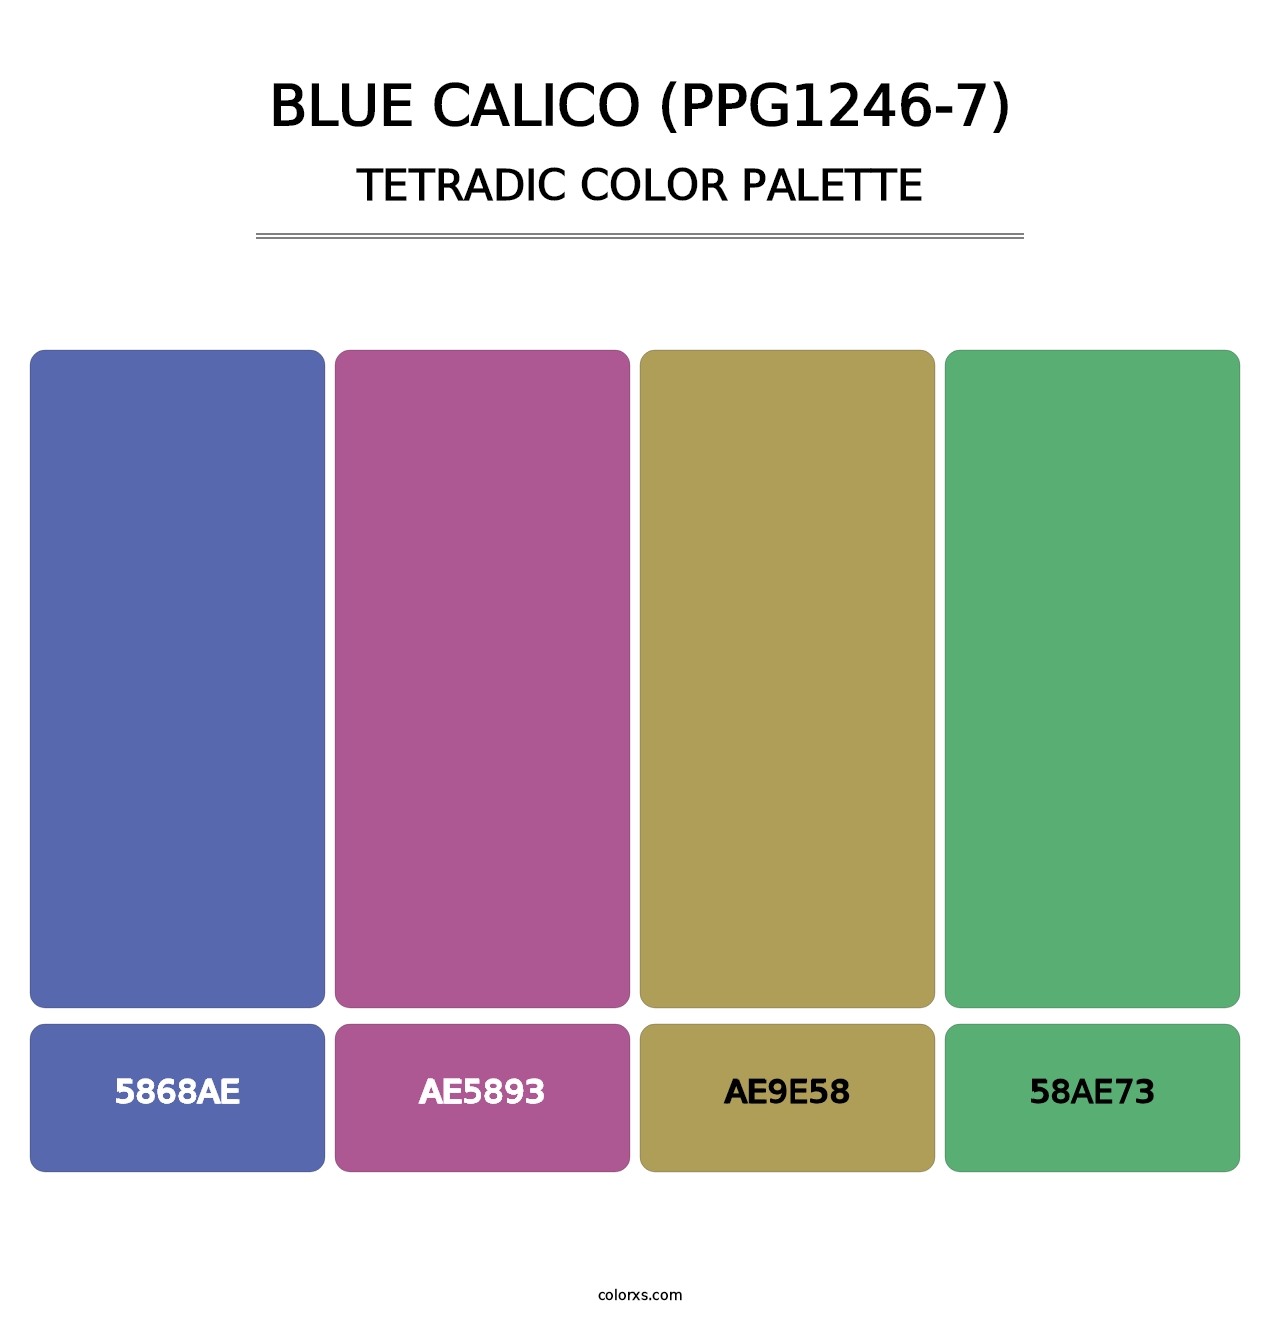 Blue Calico (PPG1246-7) - Tetradic Color Palette